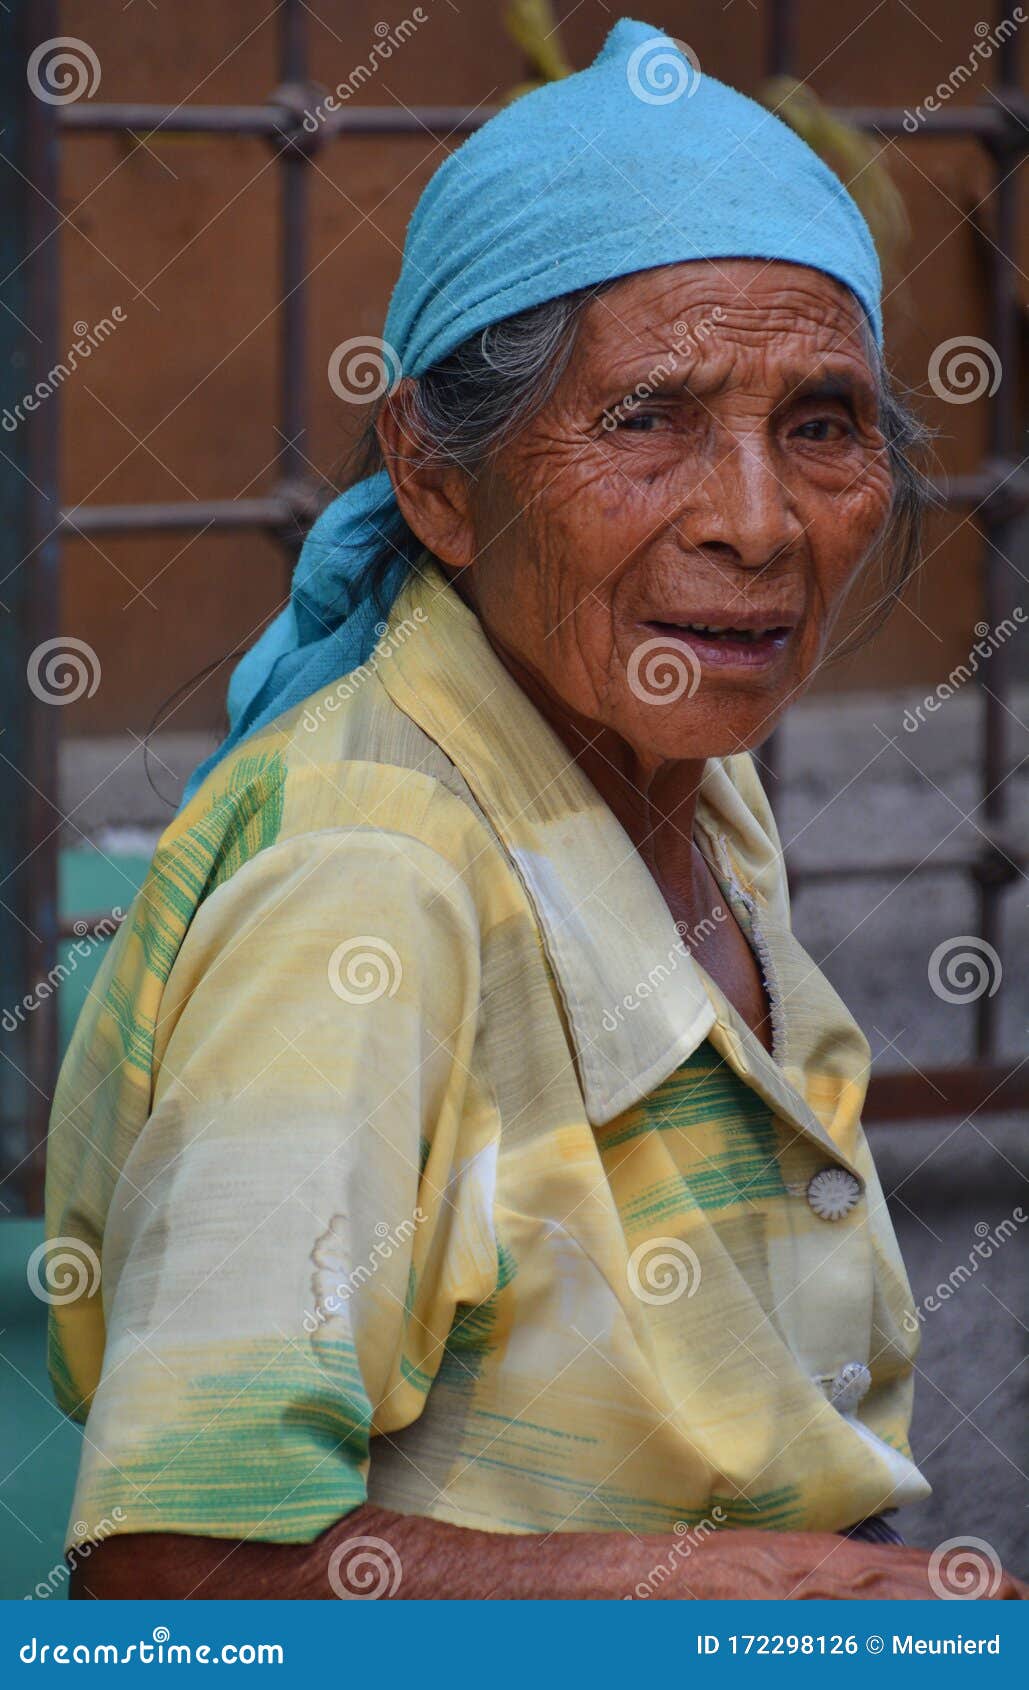 215 Honduras Women Stock Photos - Free & Royalty-Free Stock Photos from  Dreamstime